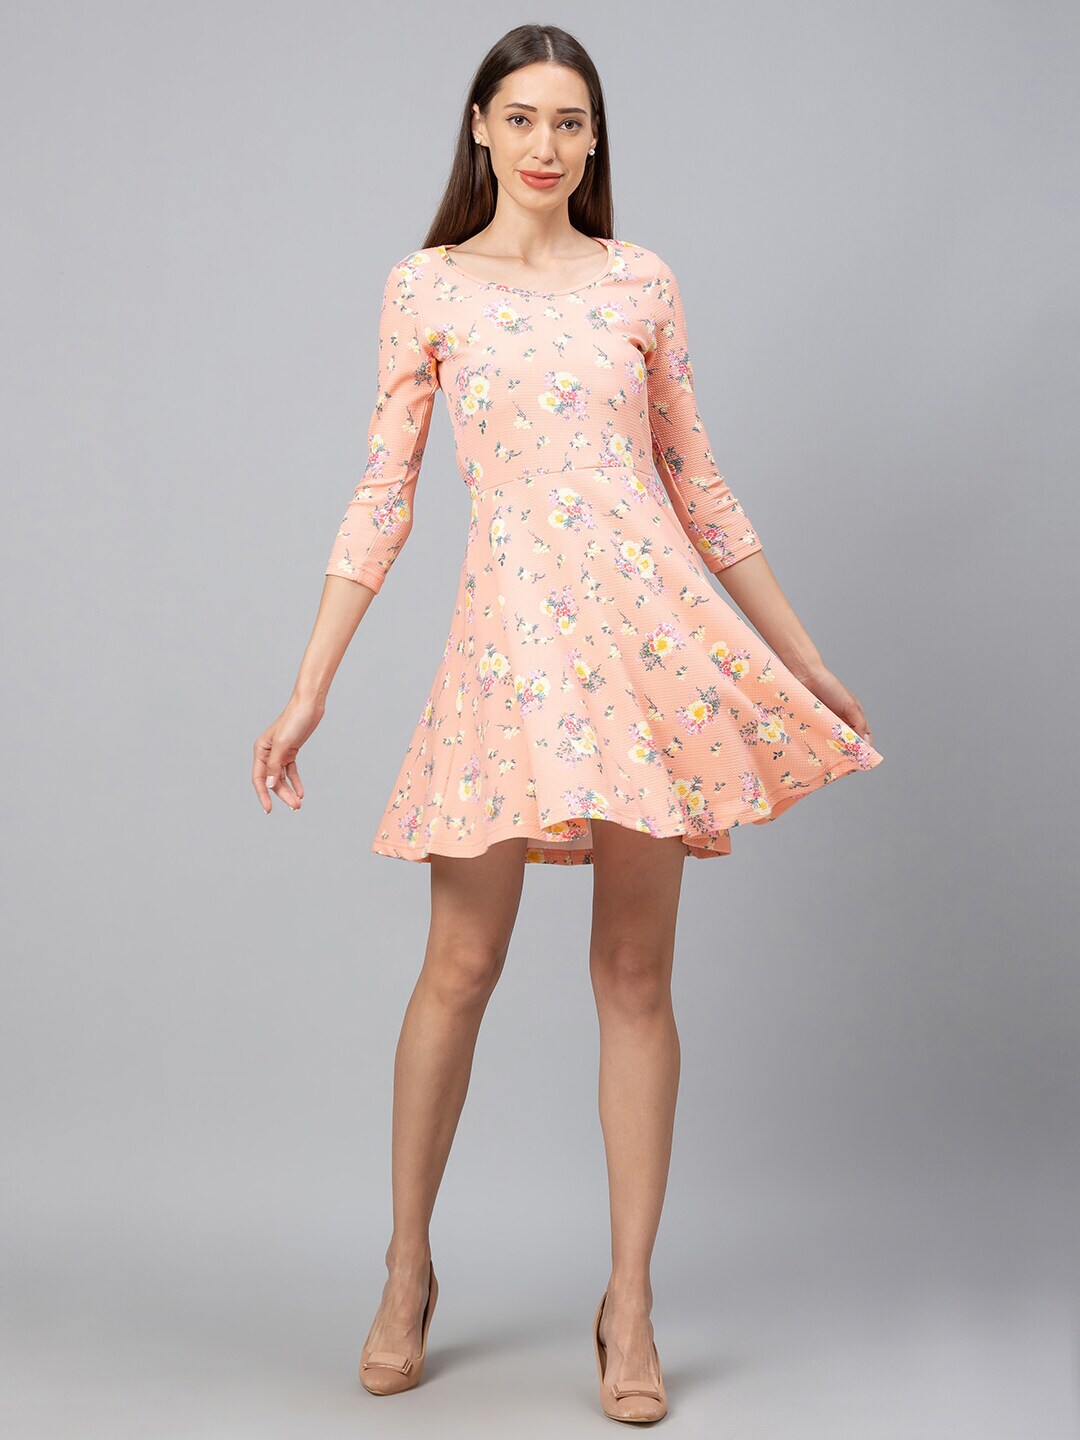 Globus Peach Printed Dress